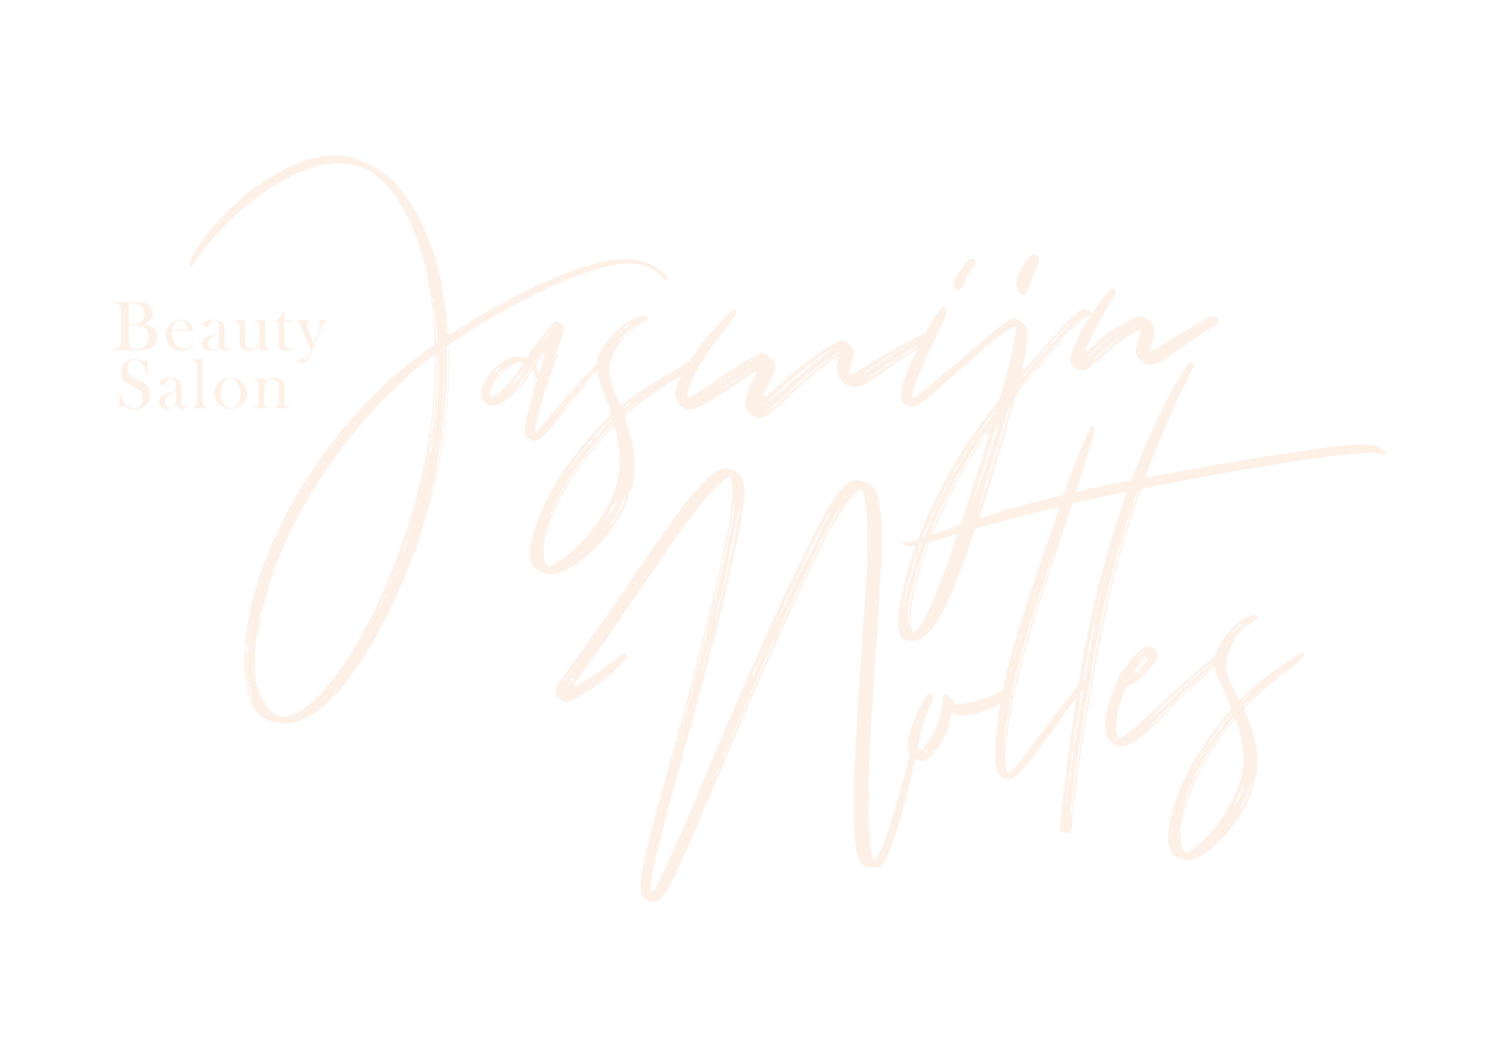 Jasmijn Noltes Beauty Salon Deventer